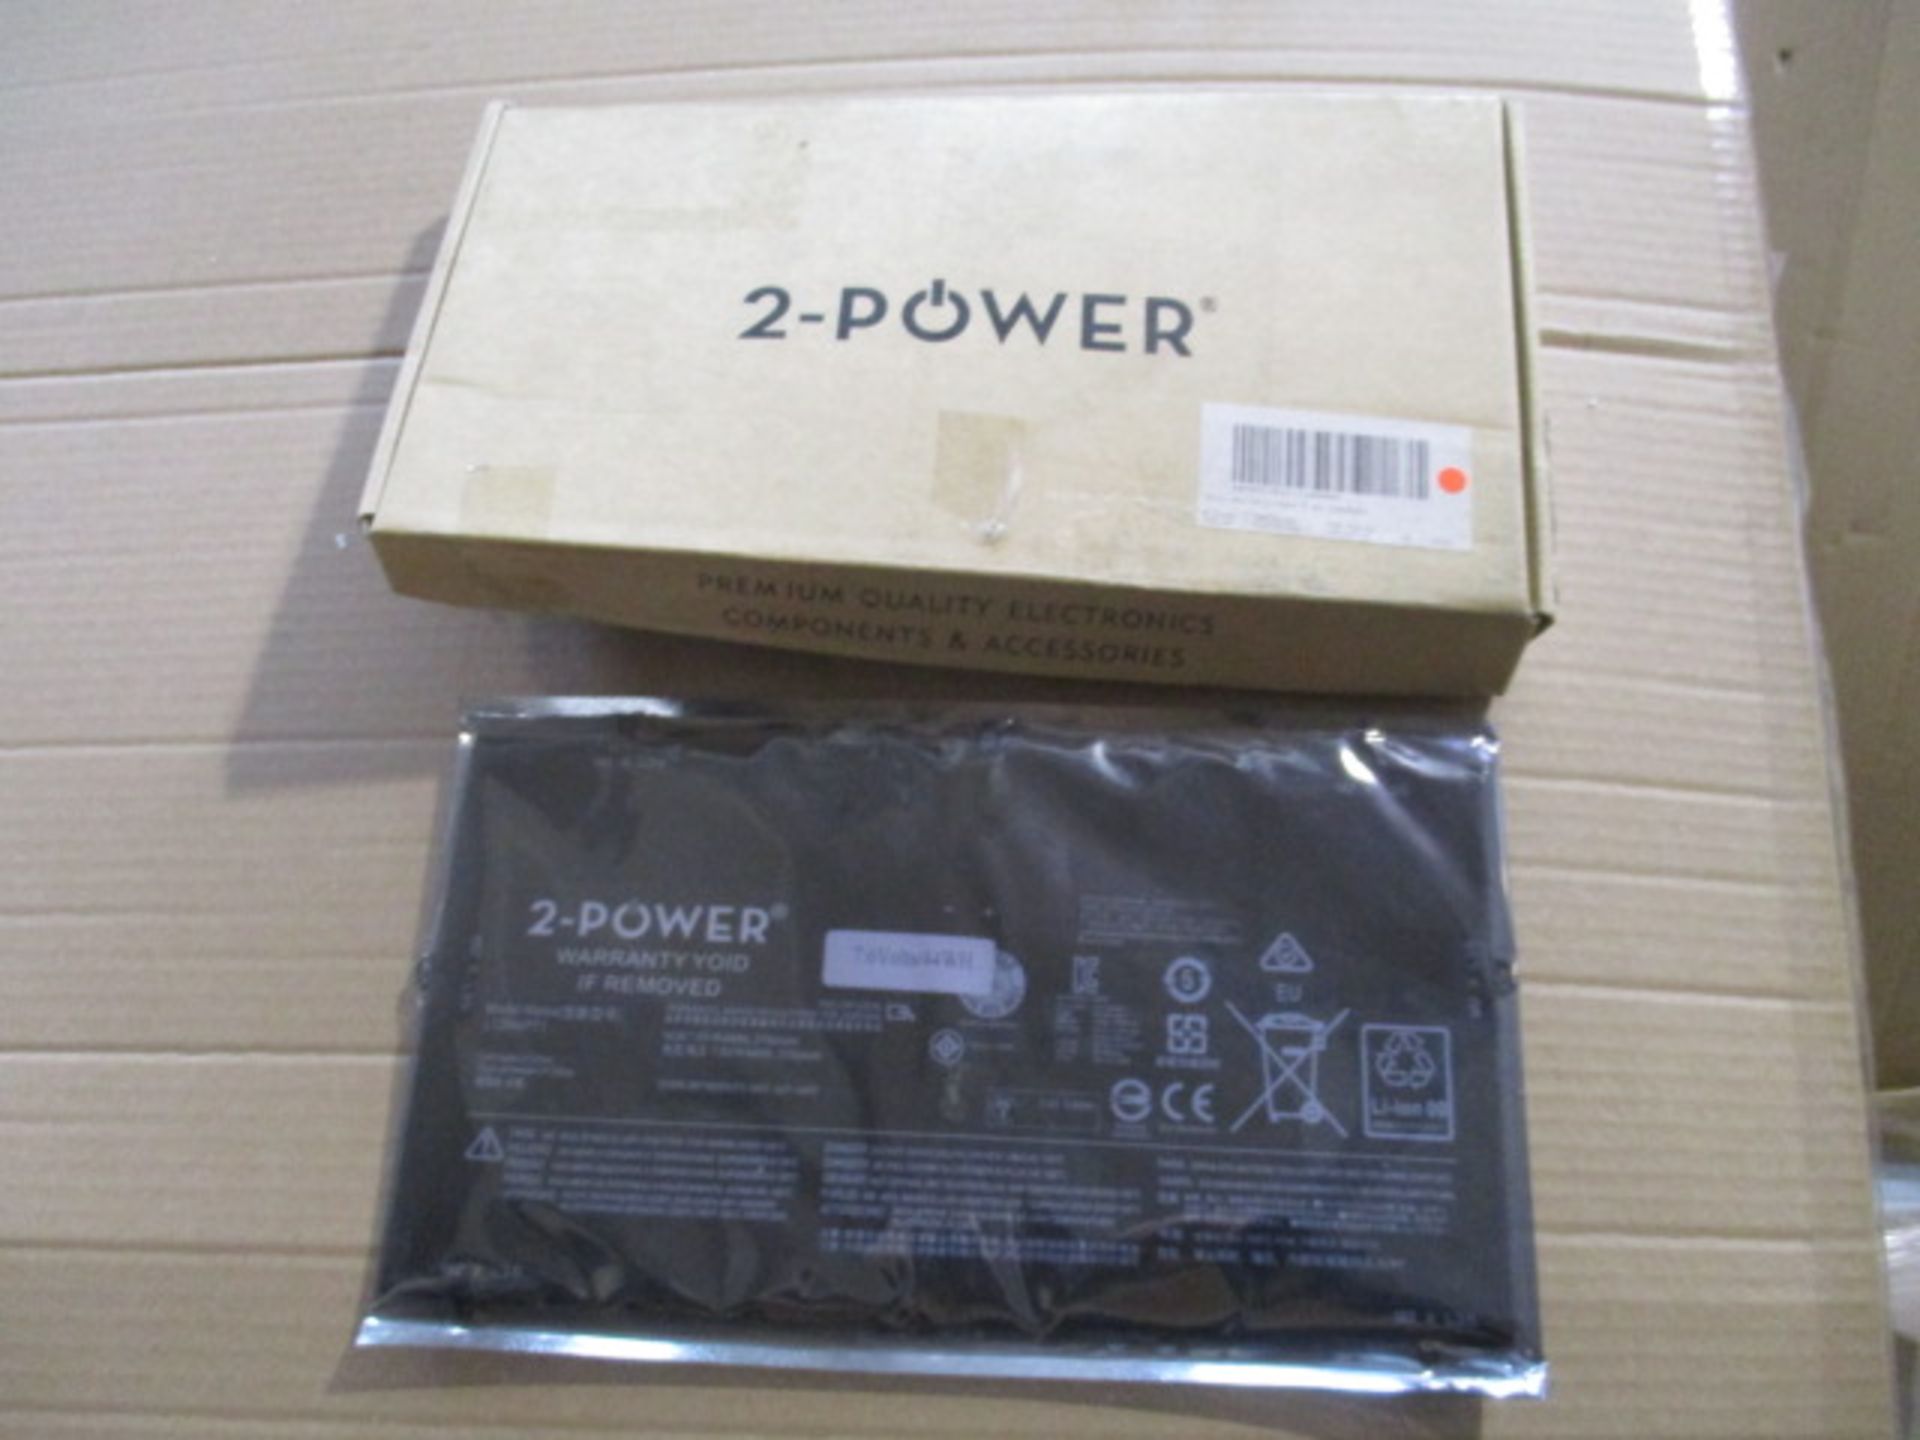 2Power Rechargebale laptop battery pack 7.6V 5900mah